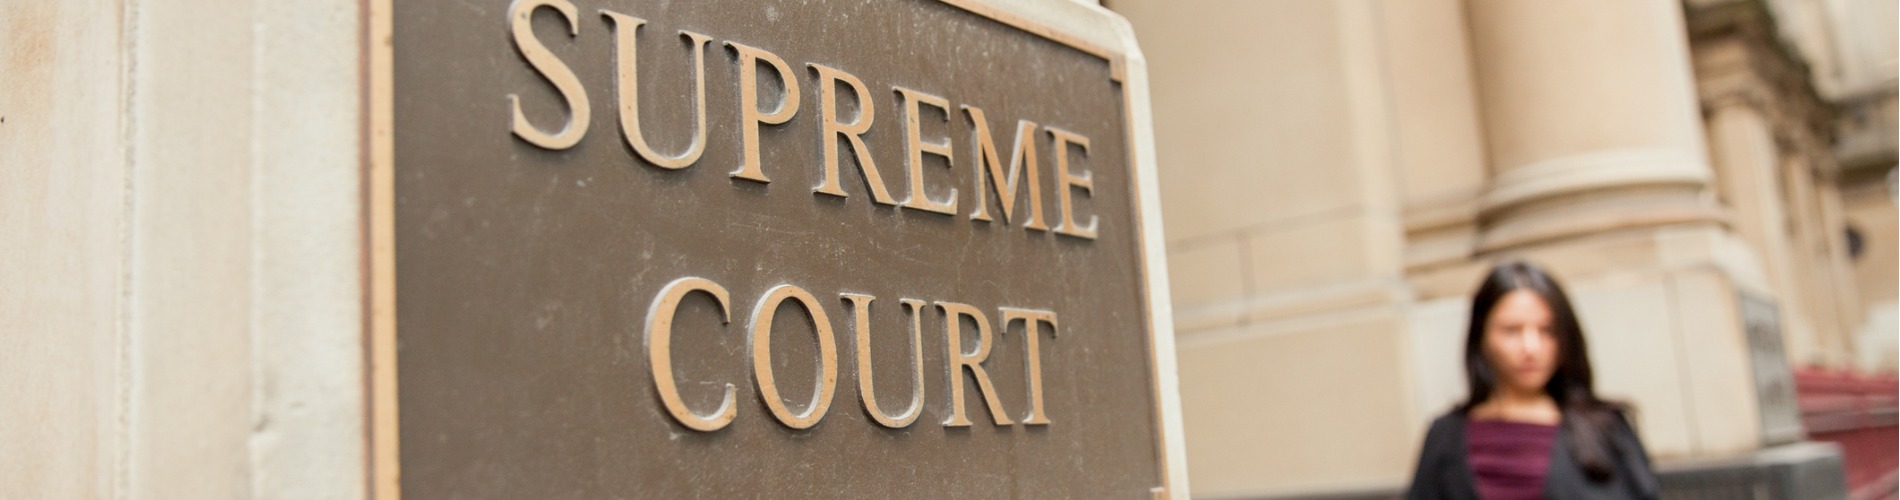 supreme-court.jpg-199x500